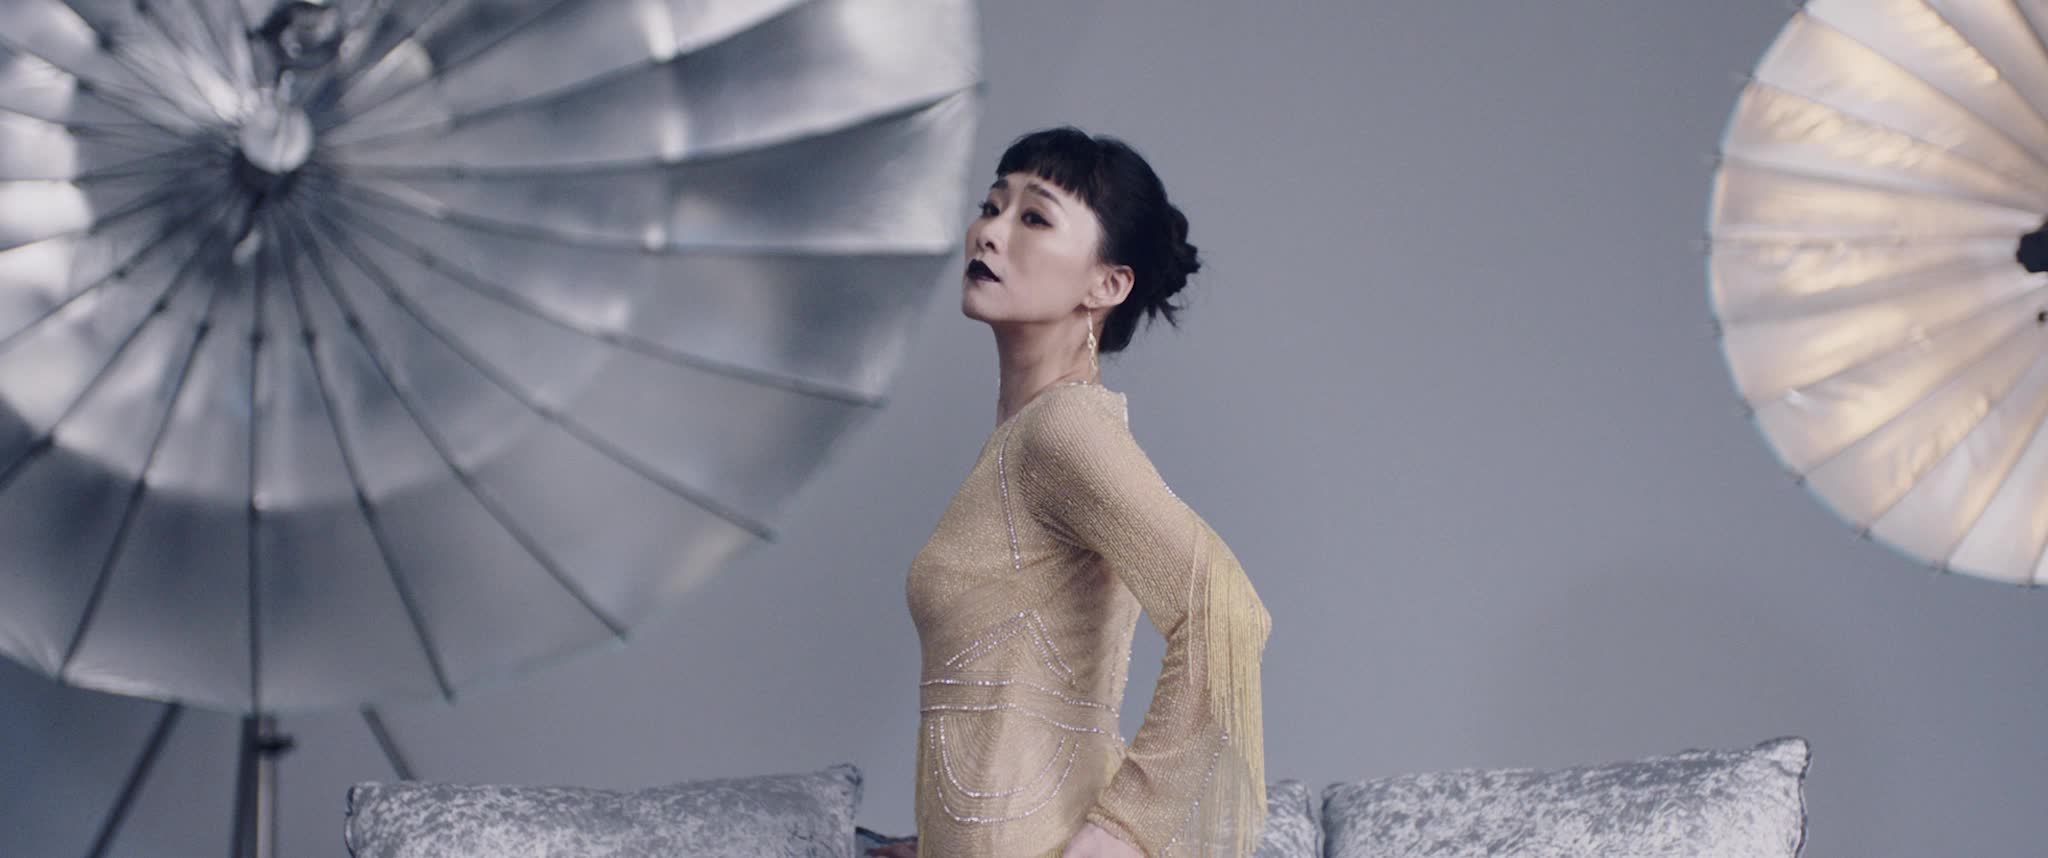 Nina Wu (Wu Ke-Xi) posiert mit angestrengter Miene, dunklem Lippenstift und in beigem Kleid in einem grau hinterlegten Fotostudio.